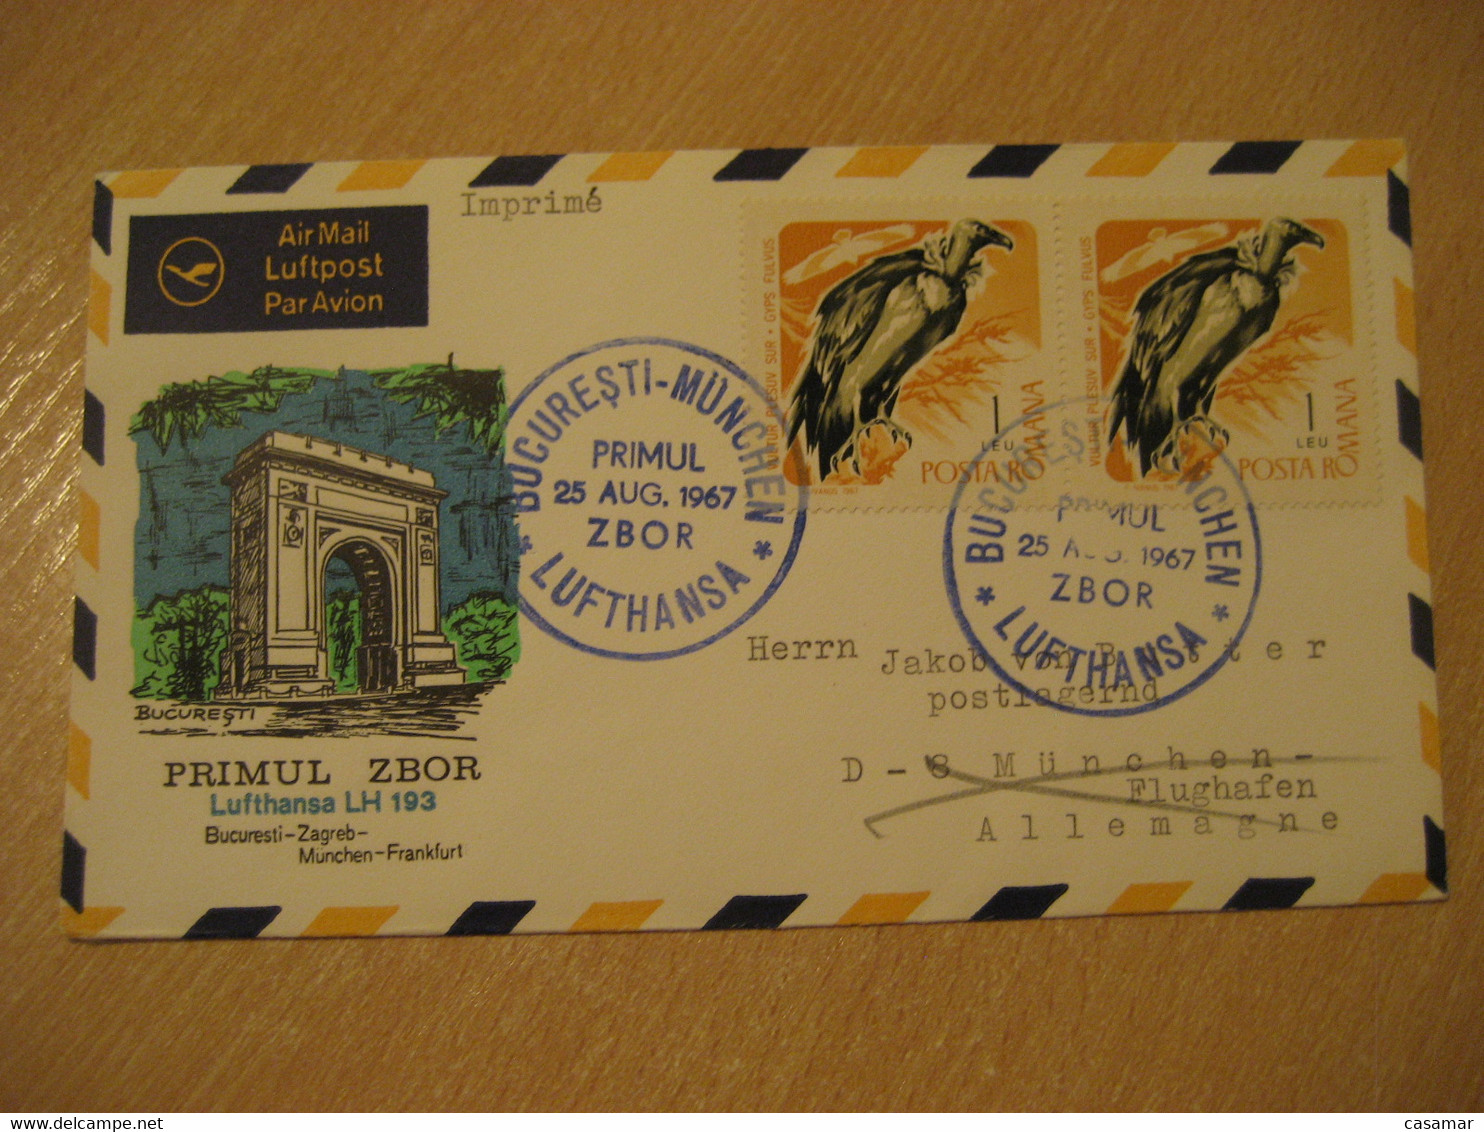 BUCHAREST Zagreb Munich Frank. 1967 Lufthansa Airlines First Flight Blue Cancel Cover ROMANIA YUGOSLAVIA CROATIA GERMANY - Covers & Documents